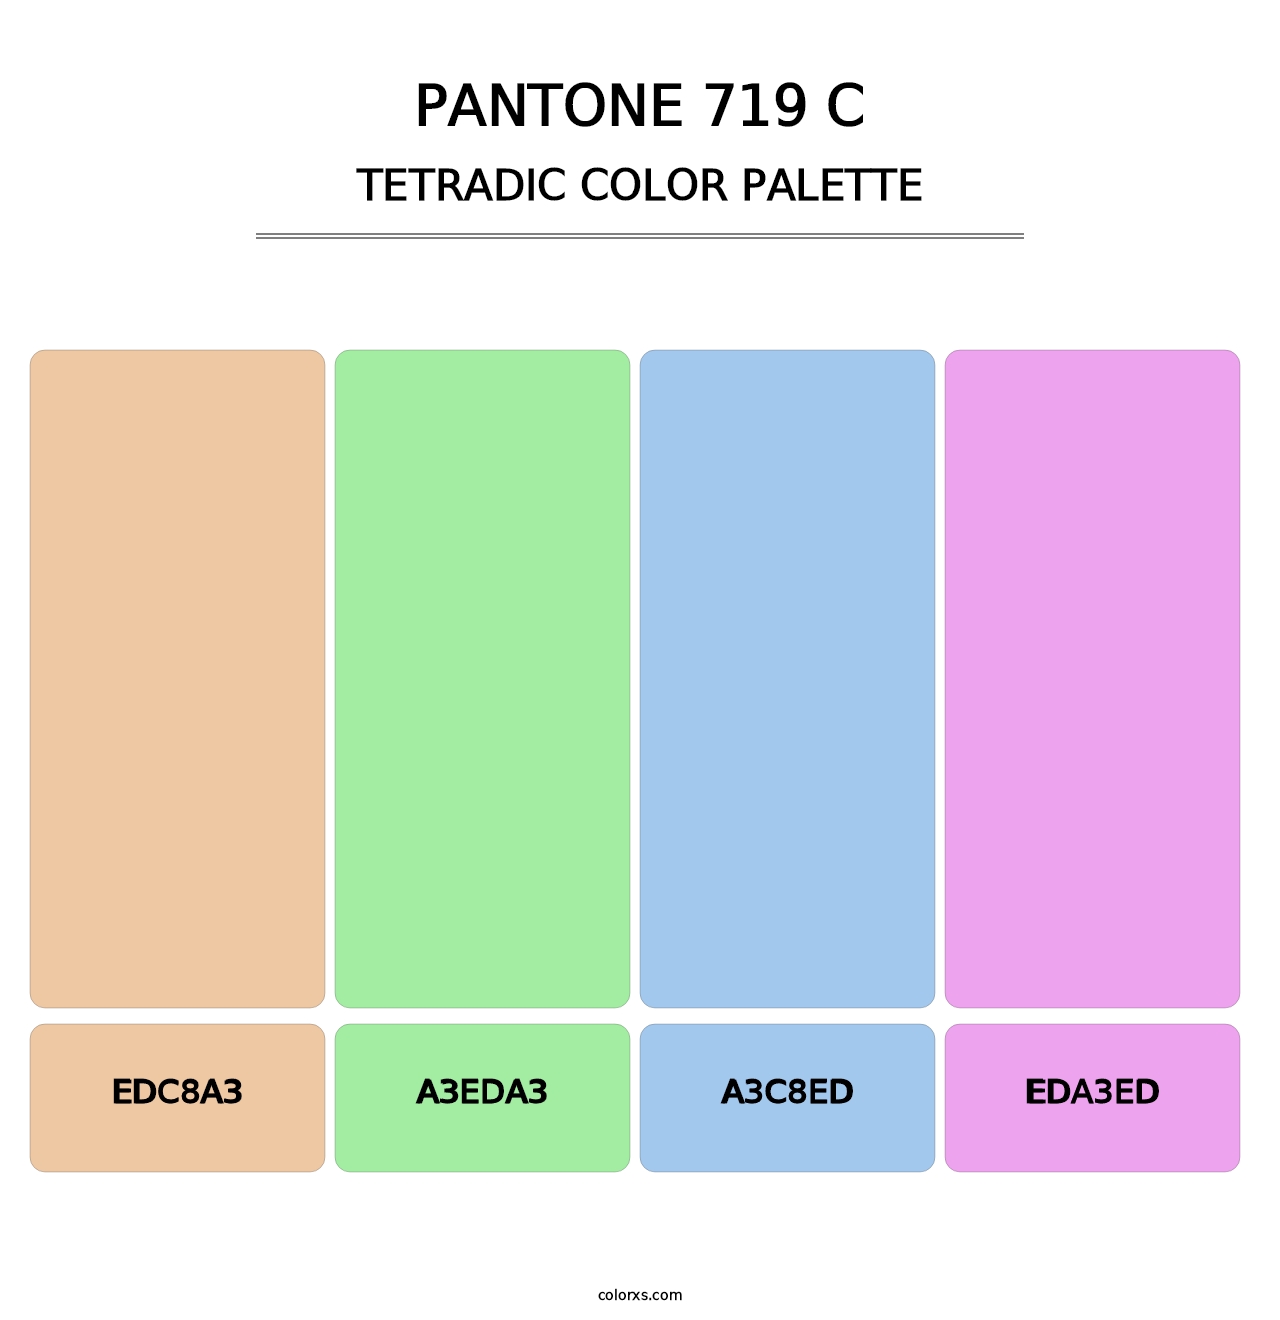 PANTONE 719 C - Tetradic Color Palette